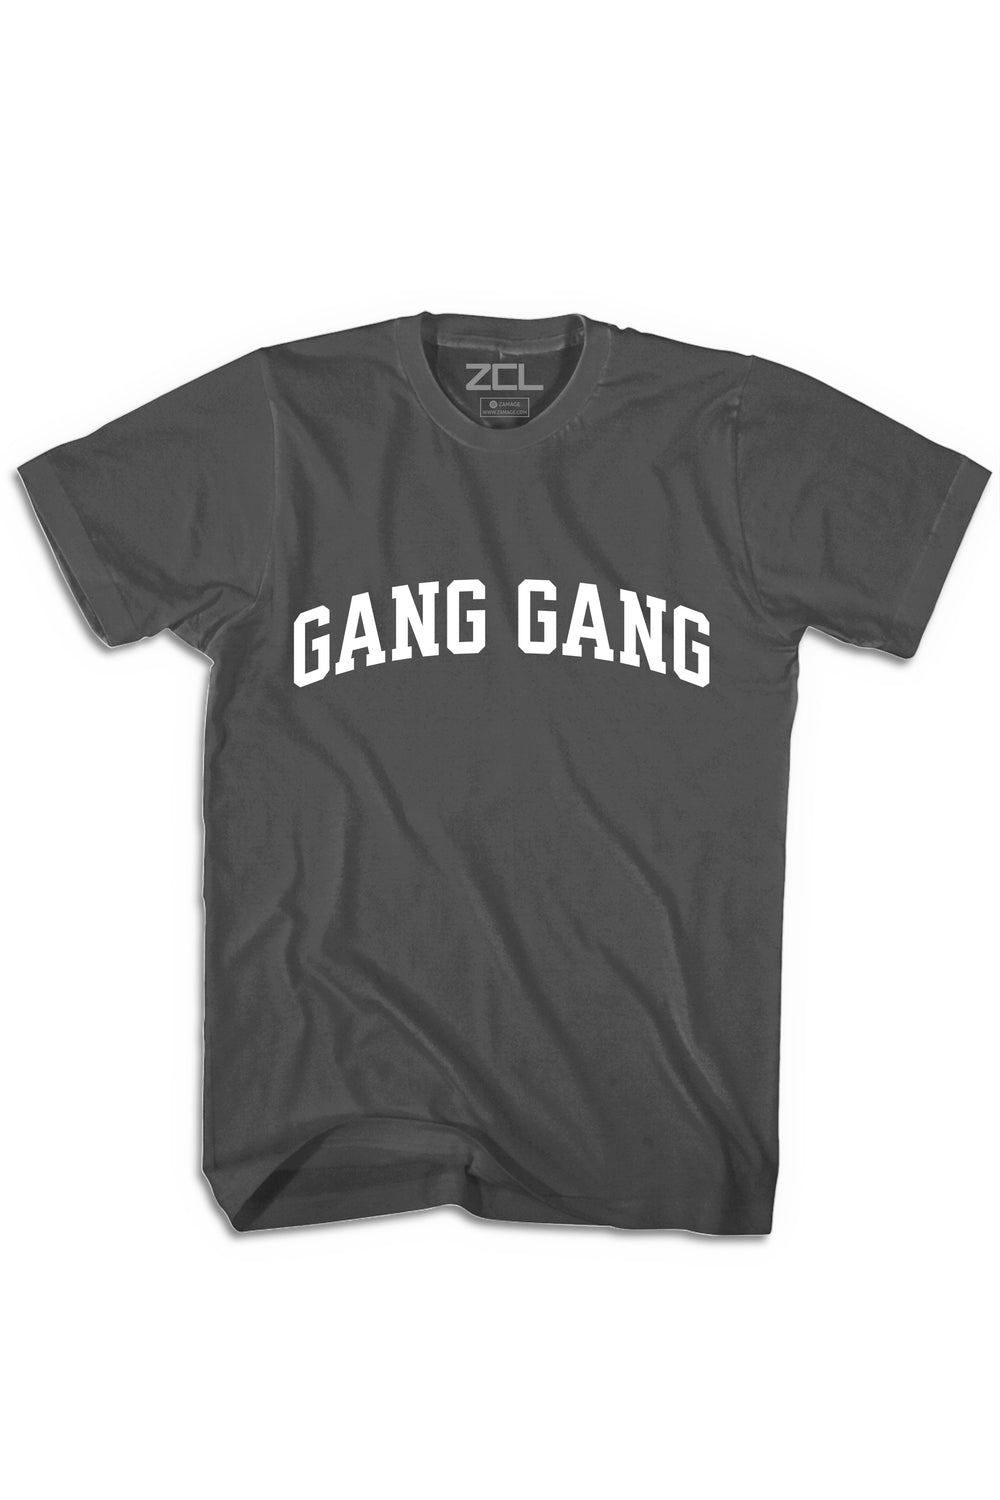 Gang Gang Tee (White Logo) - Zamage